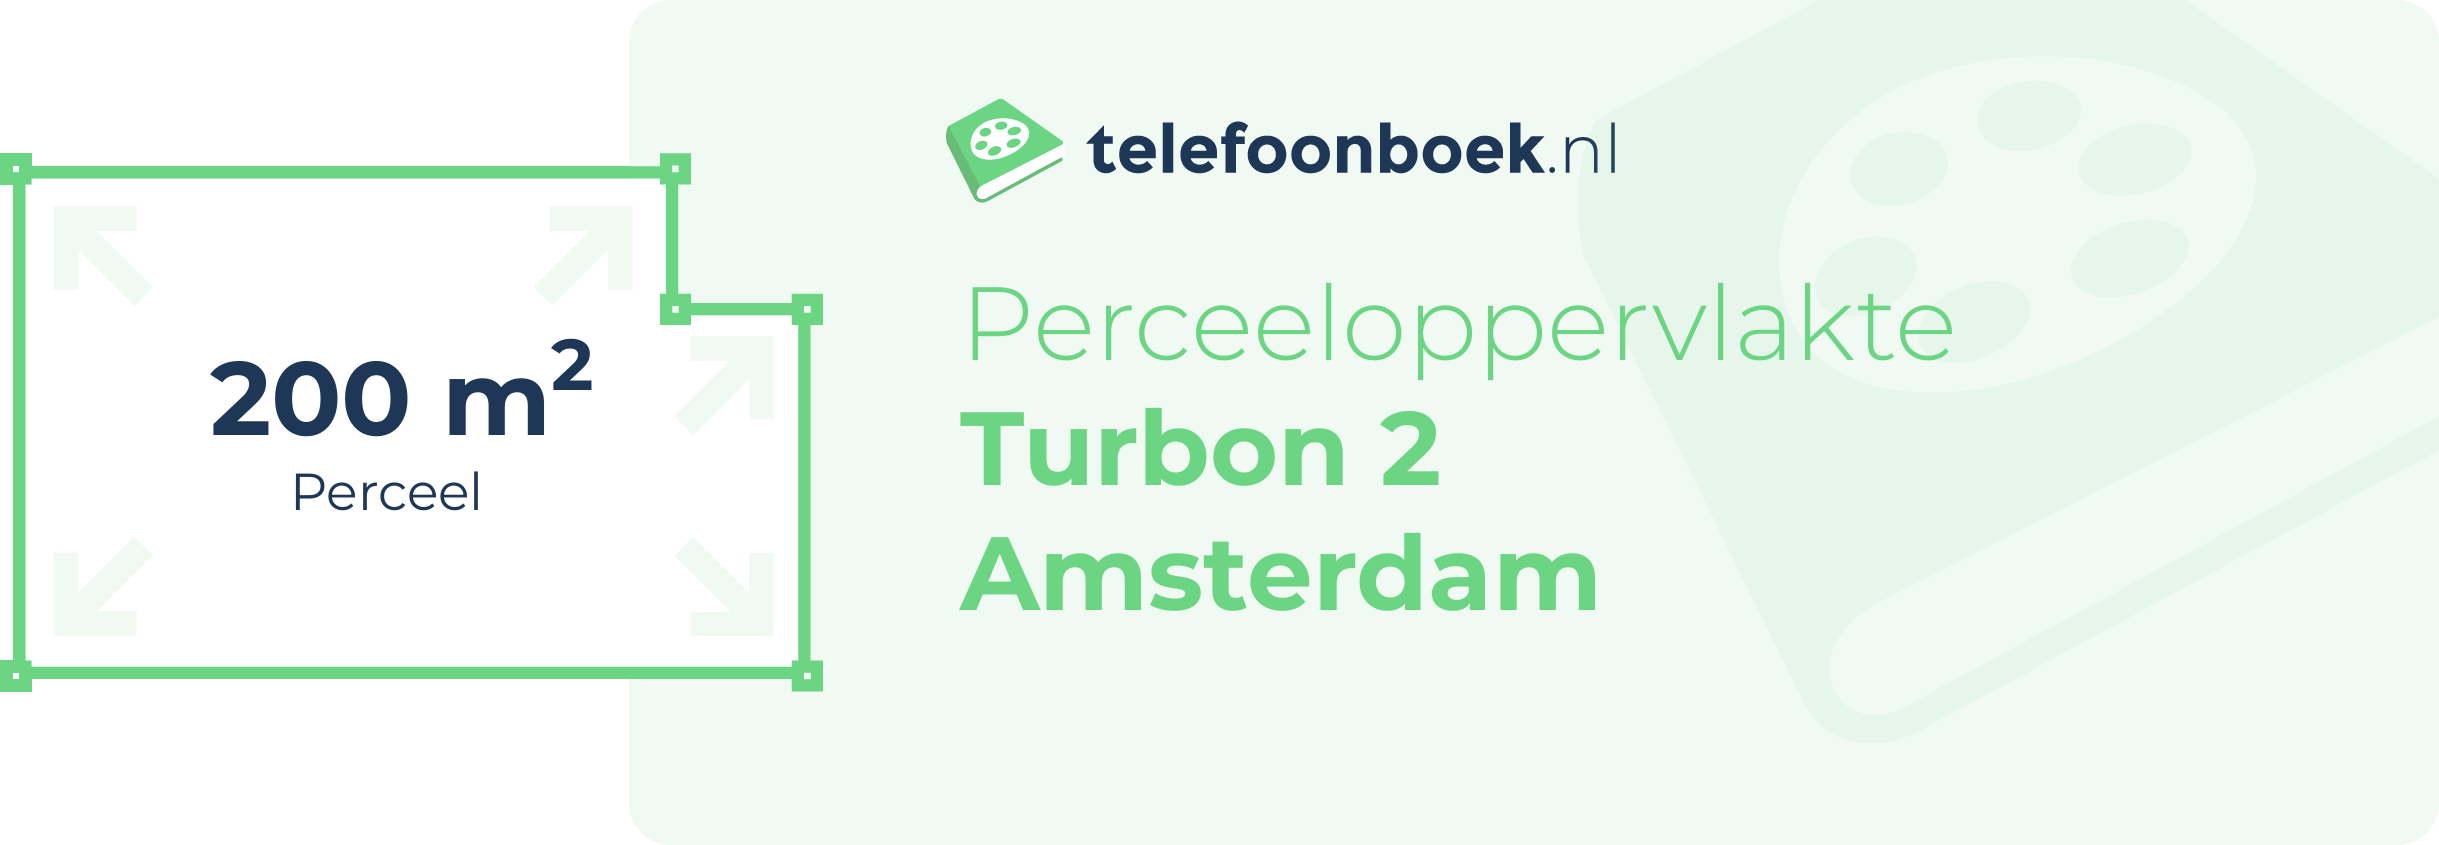 Perceeloppervlakte Turbon 2 Amsterdam